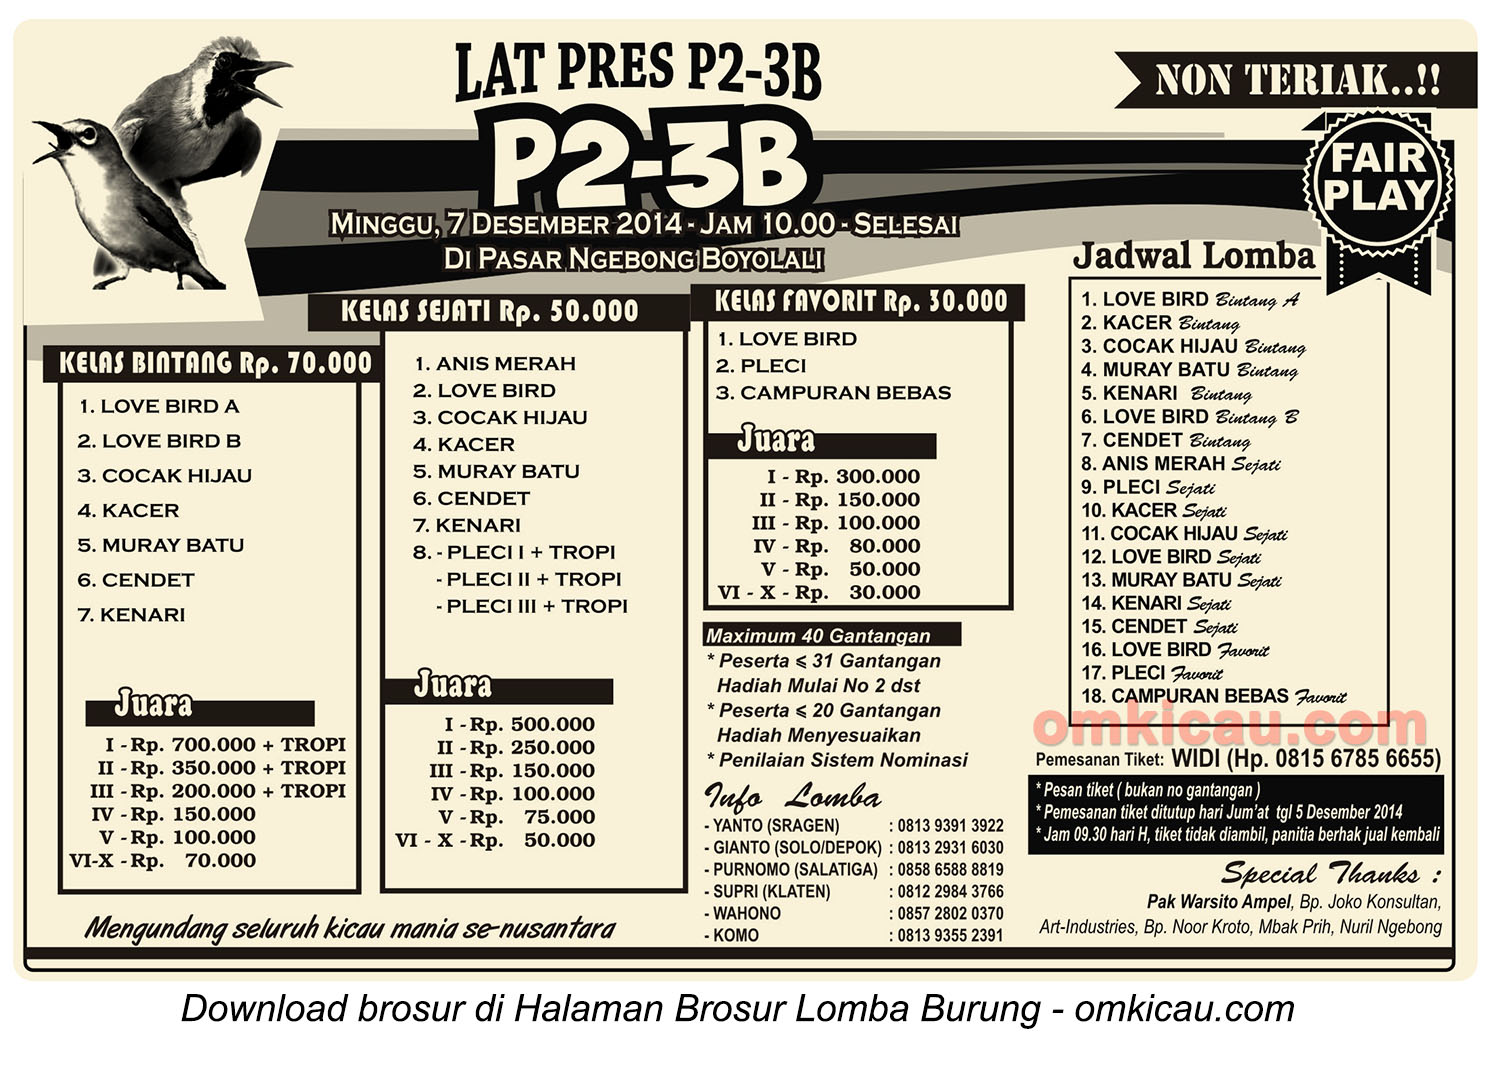 Brosur Latpres Burung Berkicau P2-3B, Boyolali, 7 Desember 2014